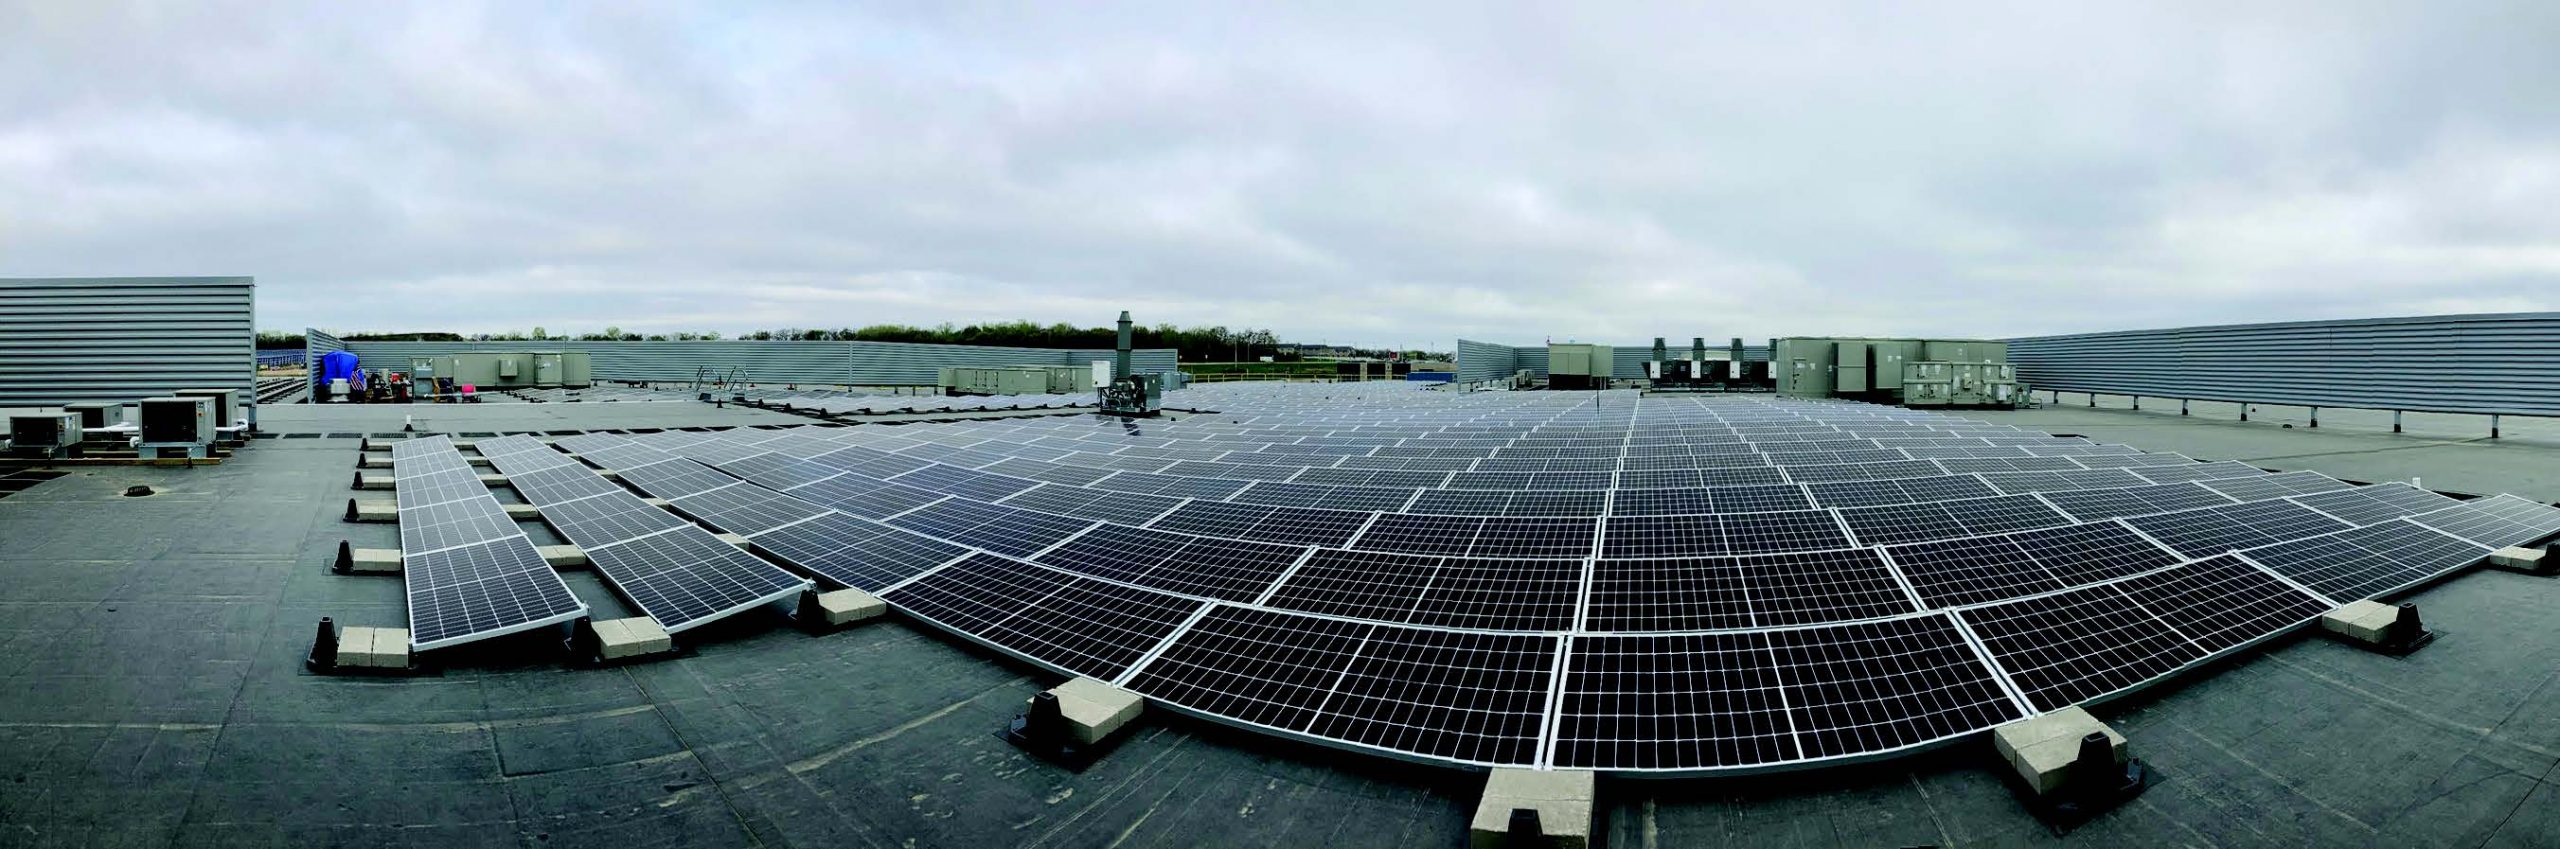 Eurofins lab solar panels